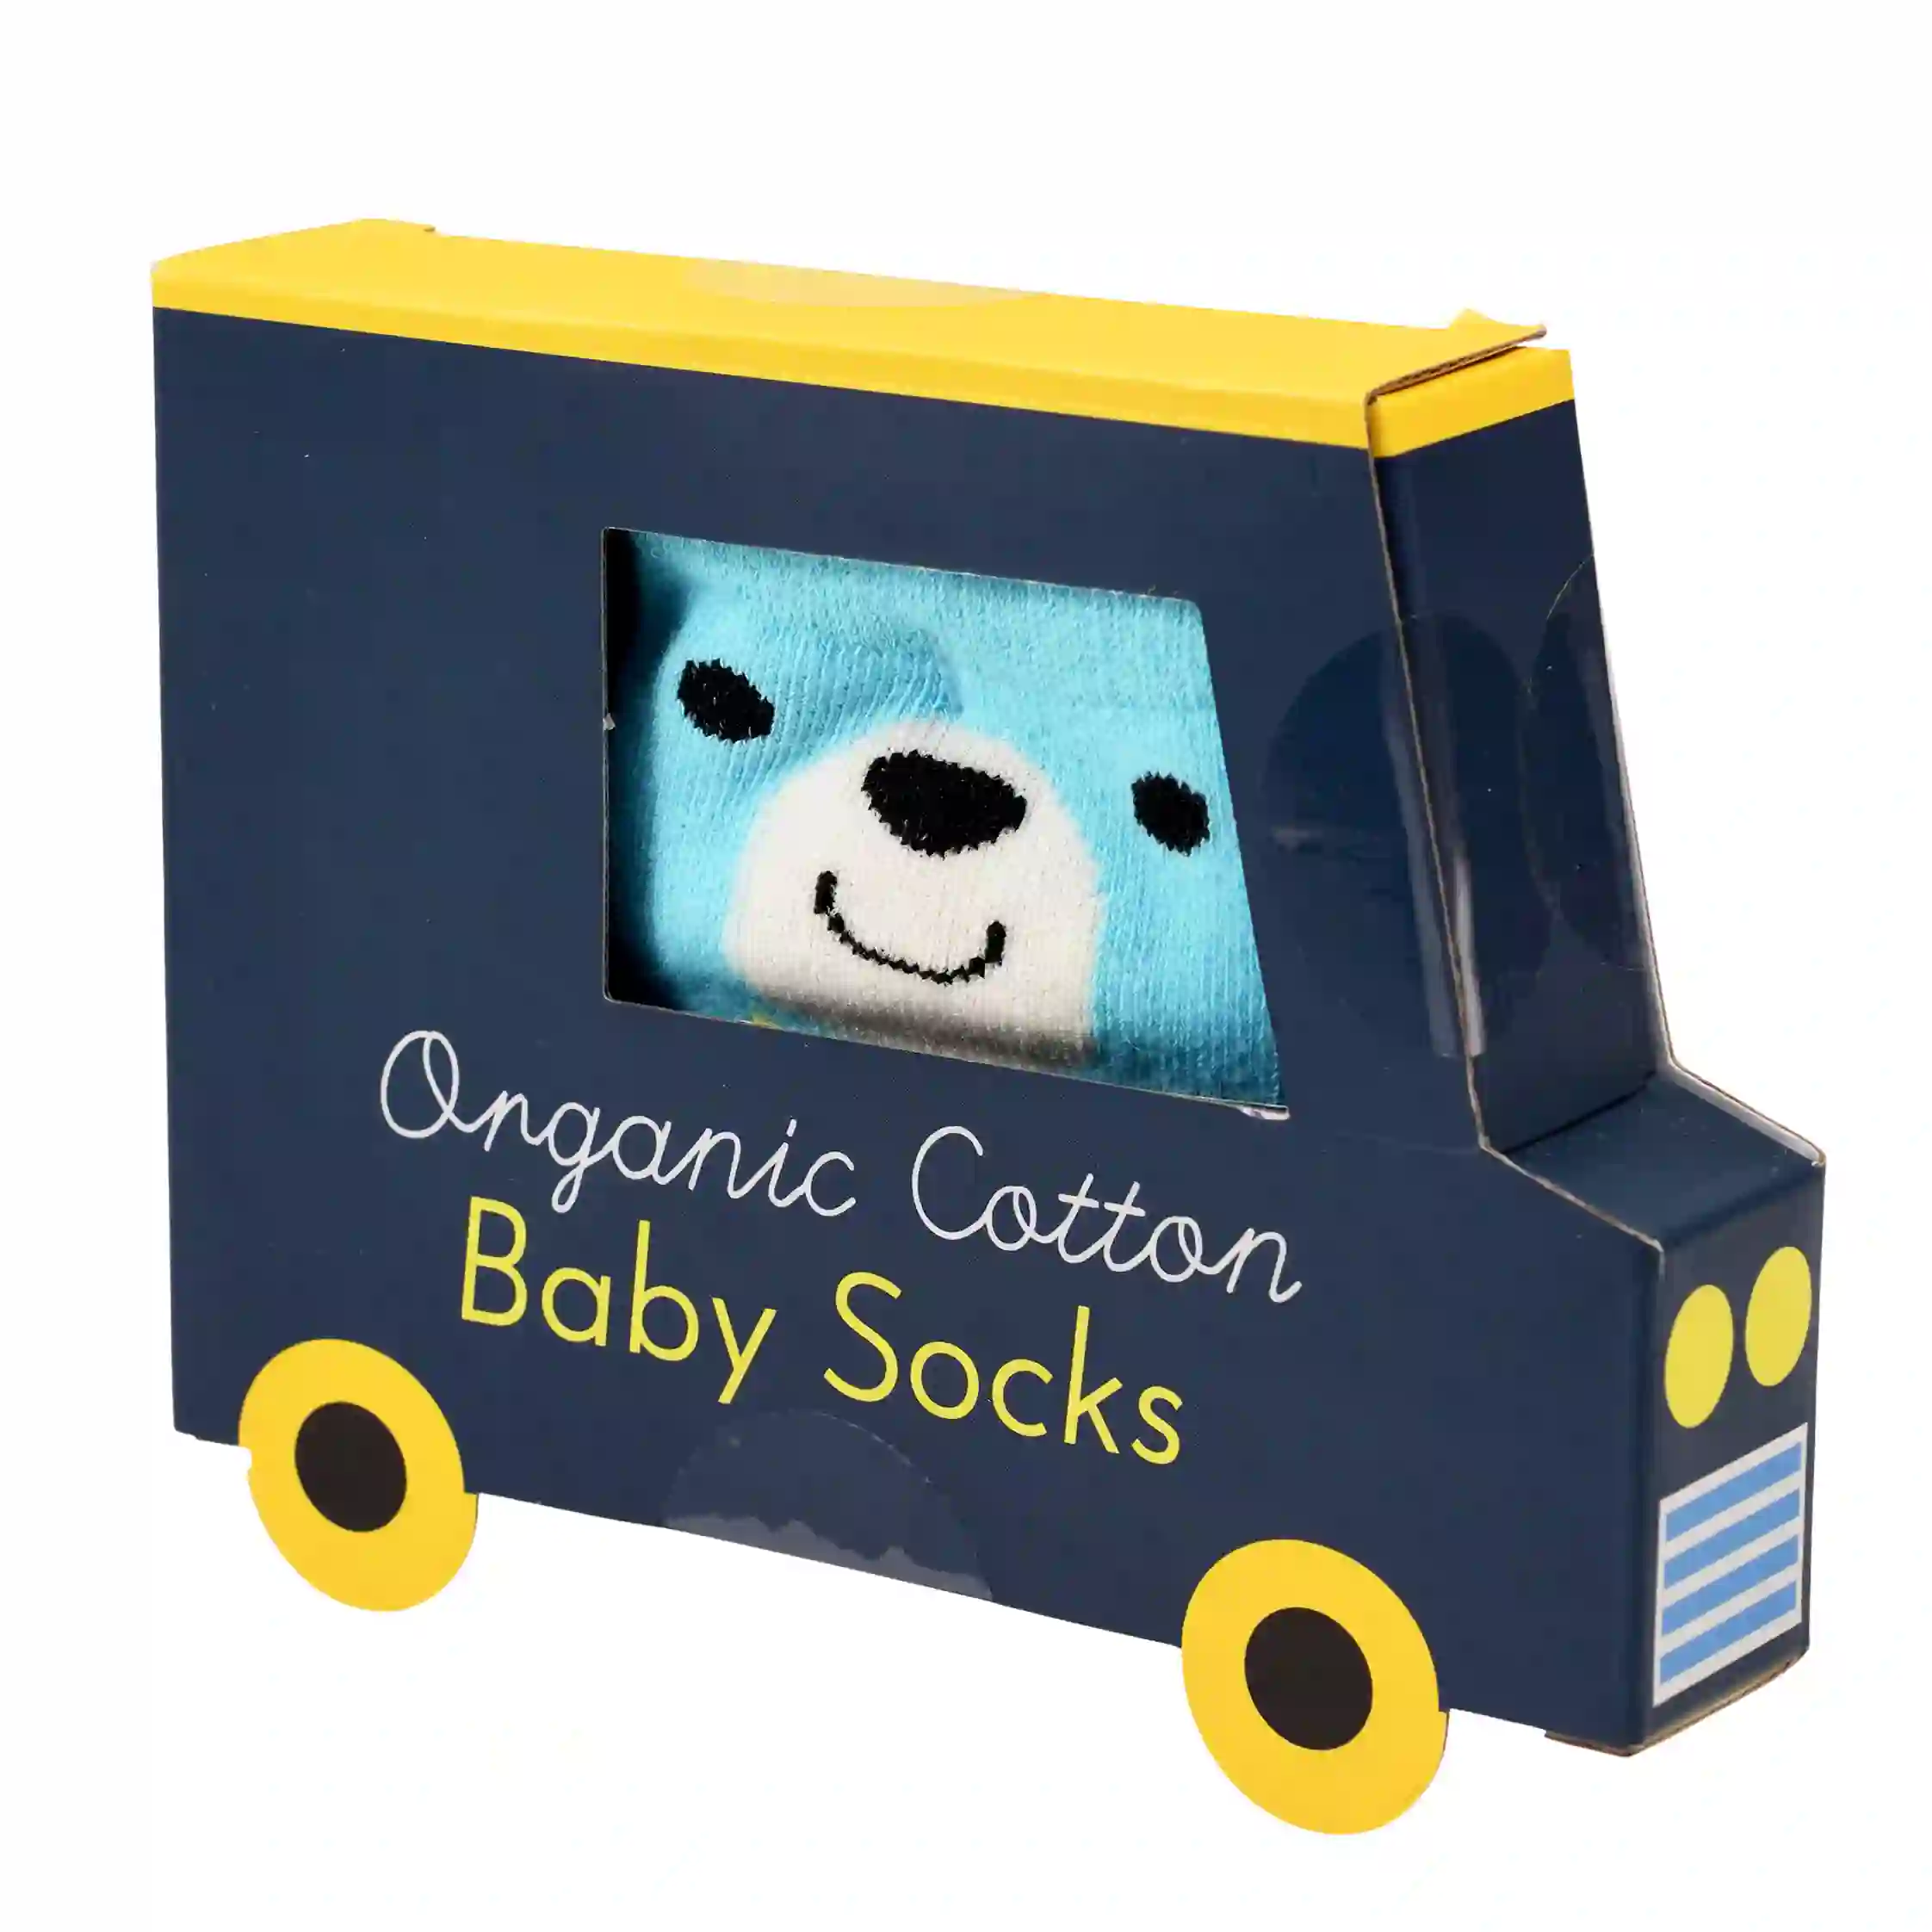 pair of baby socks - blue bear